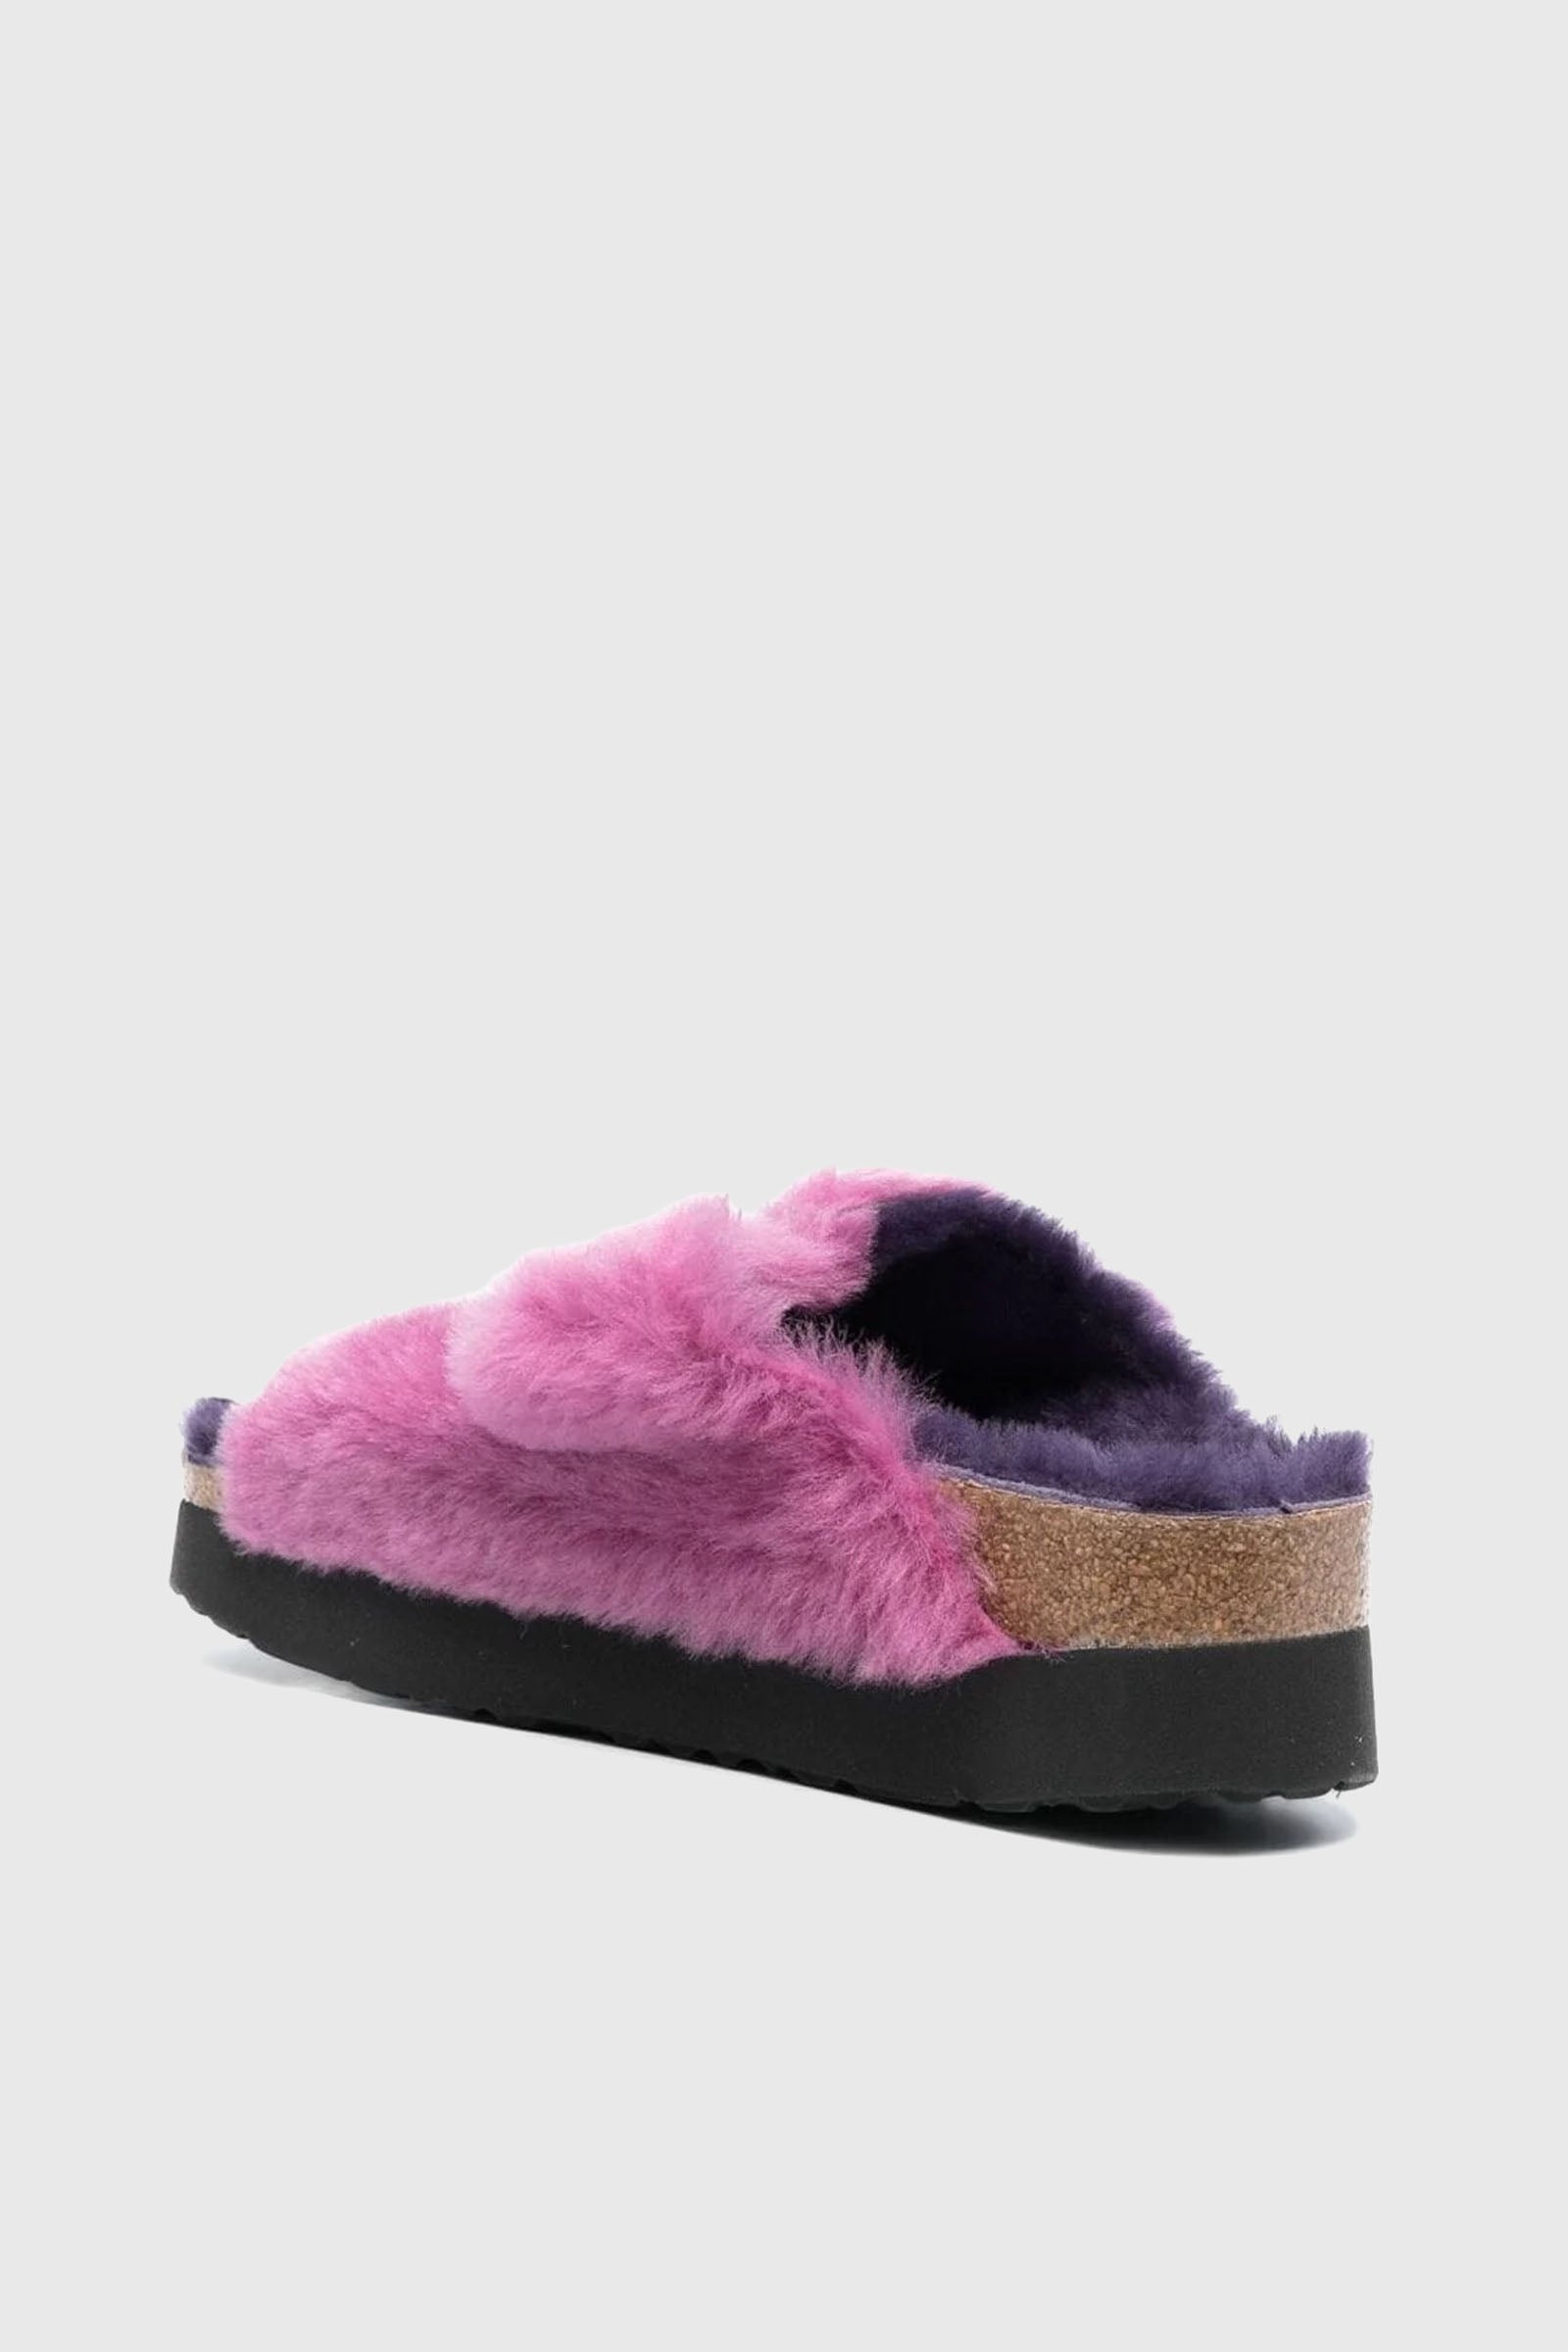 Birkenstock Arizona Sandal Big Buckle Leather/Lamb Fur Purple - 3